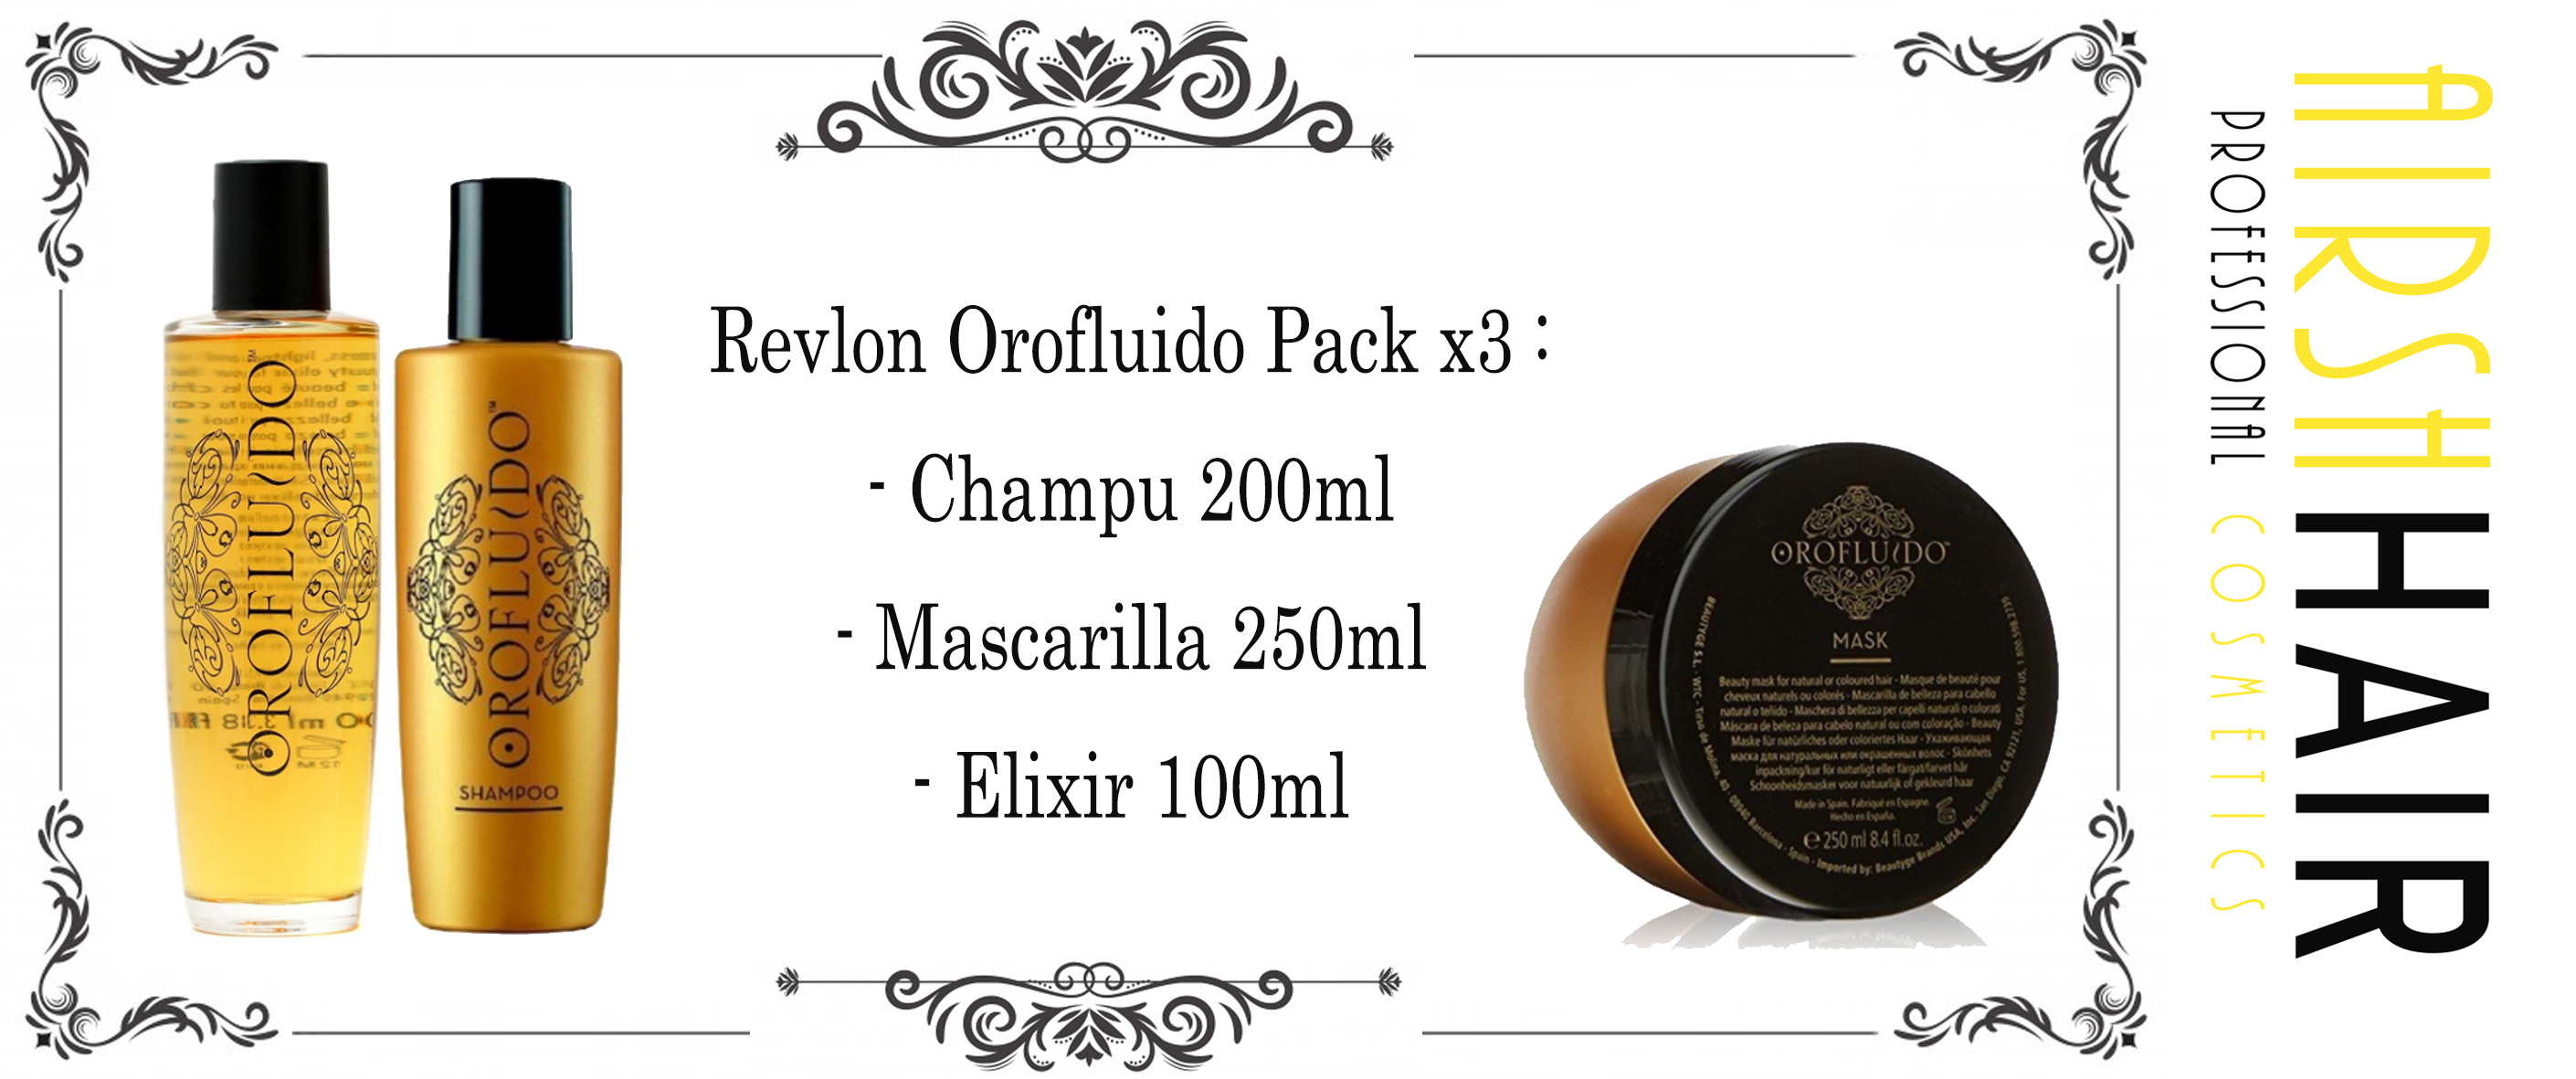 Revlon Orofluido Pack x3 Champu 200ml + Mascarilla 250ml + Elixir 100ml